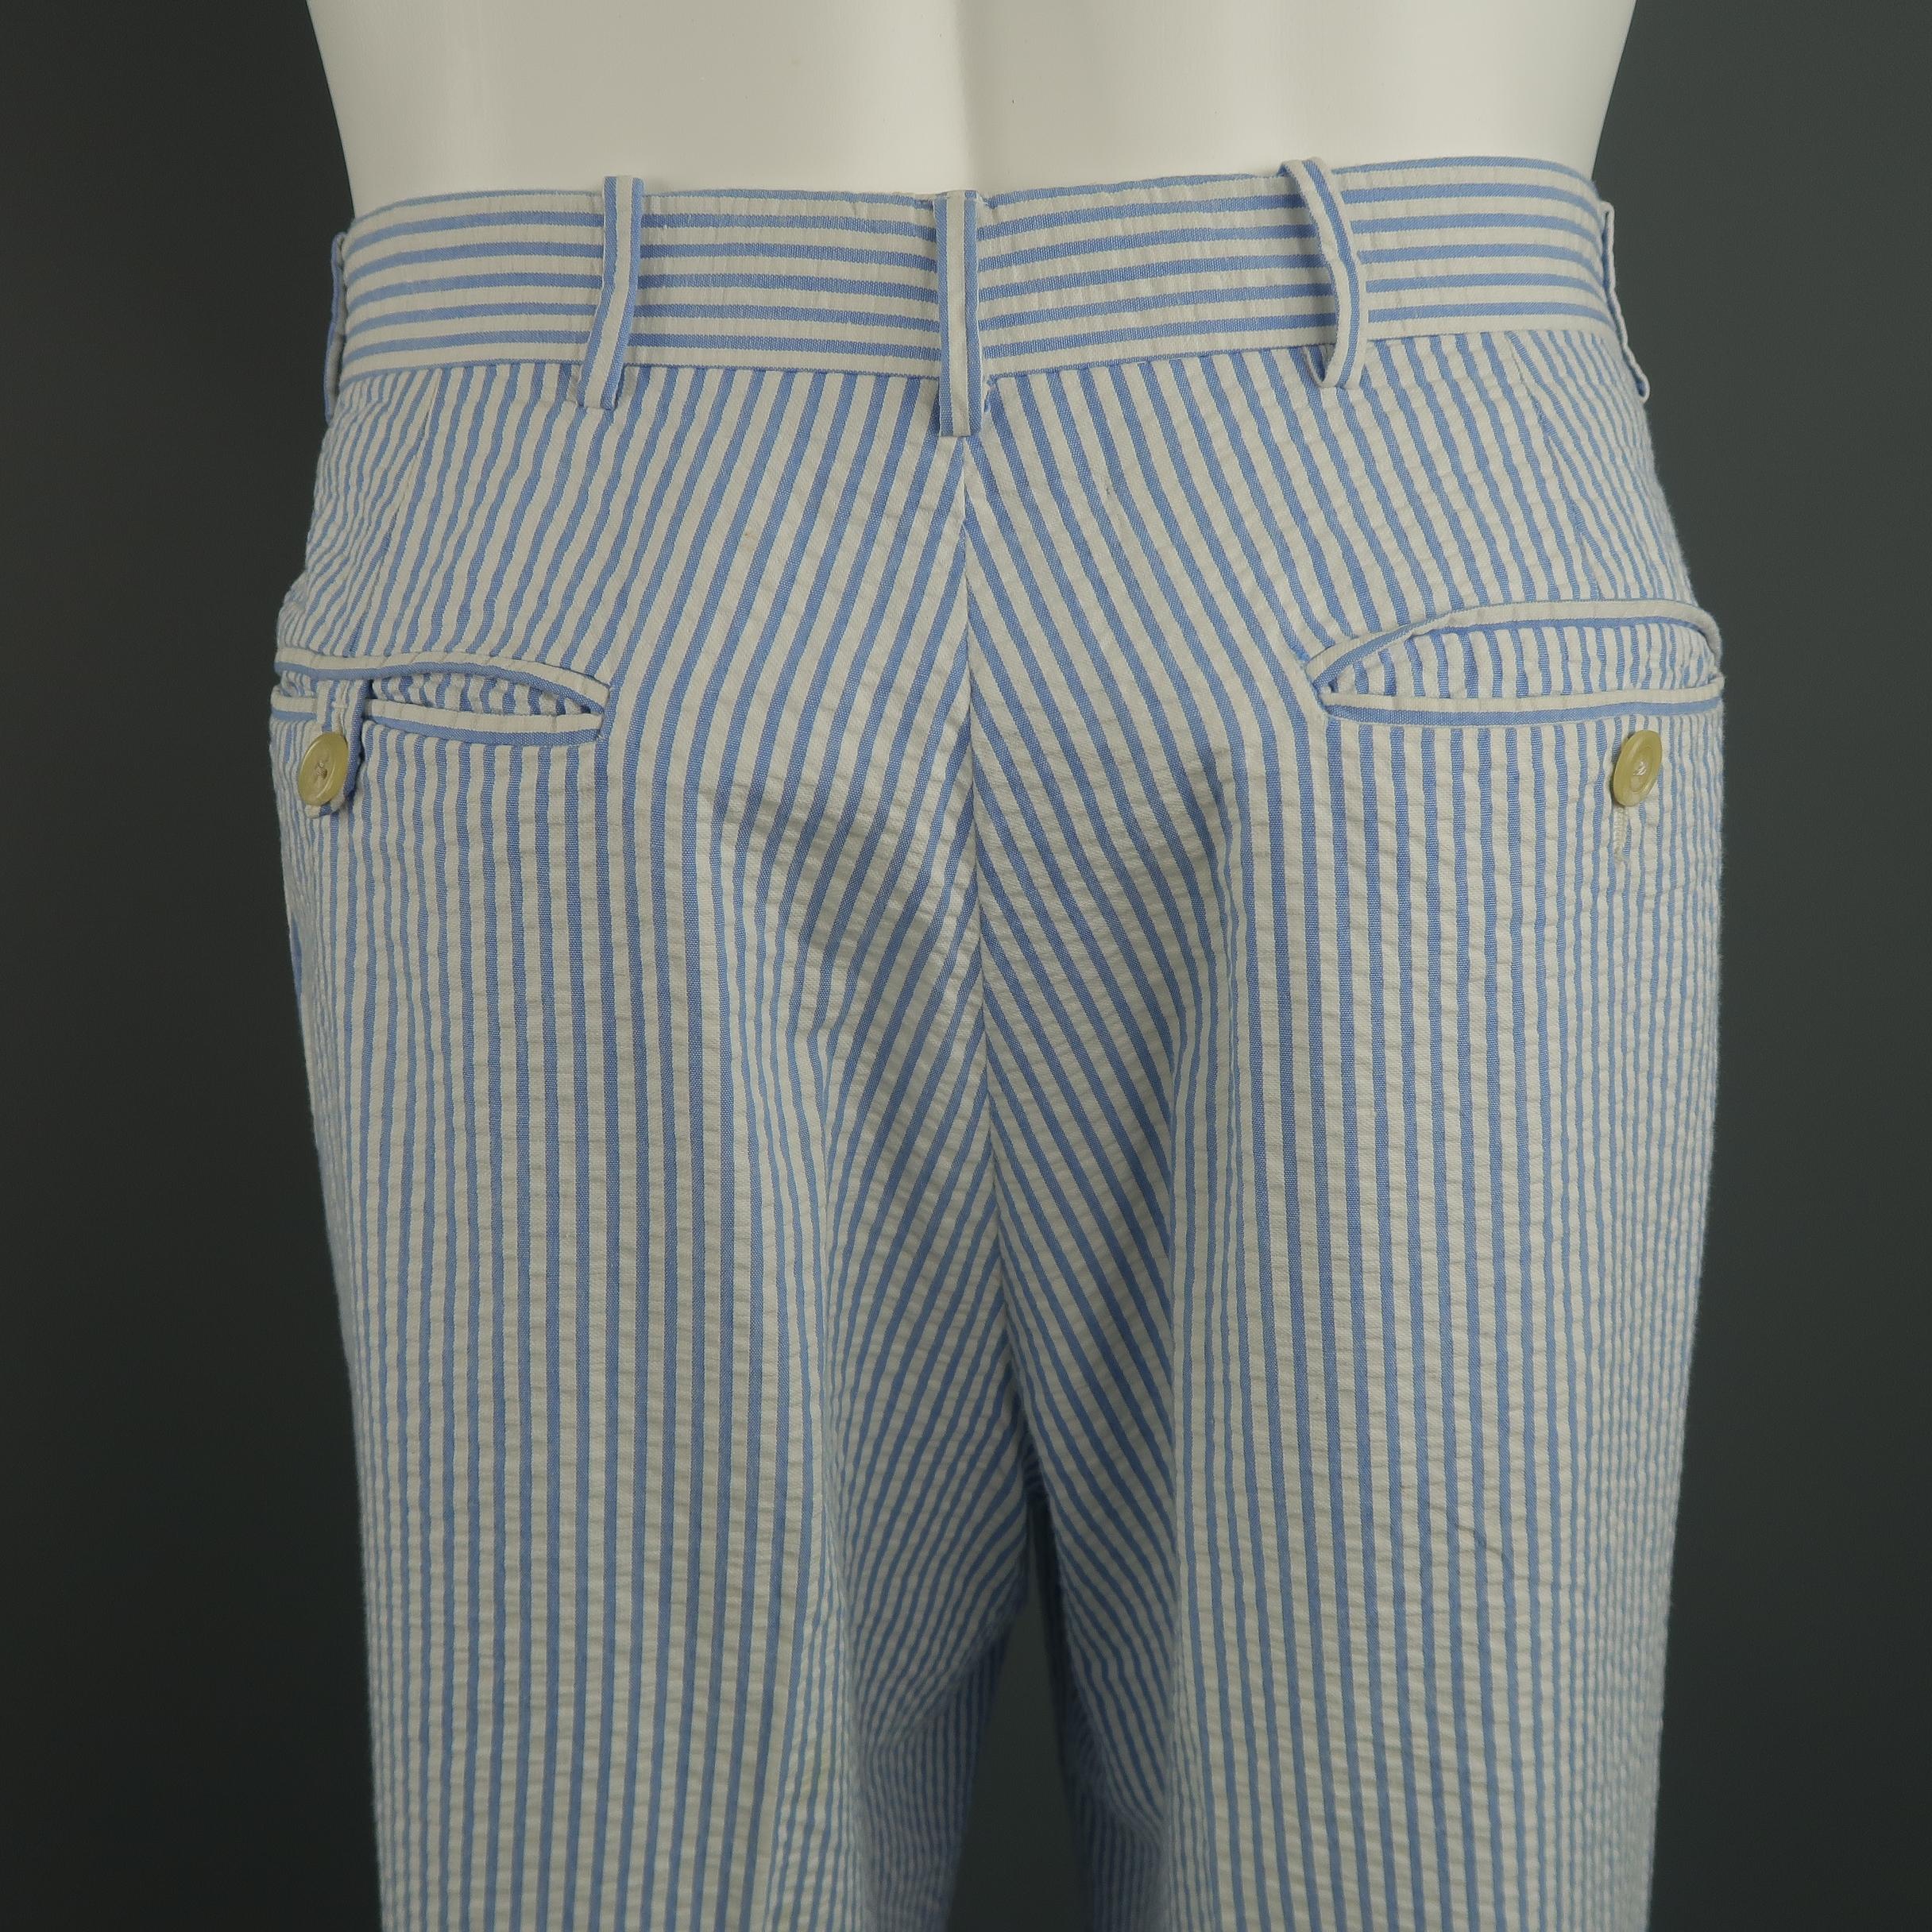 blue and white seersucker pants